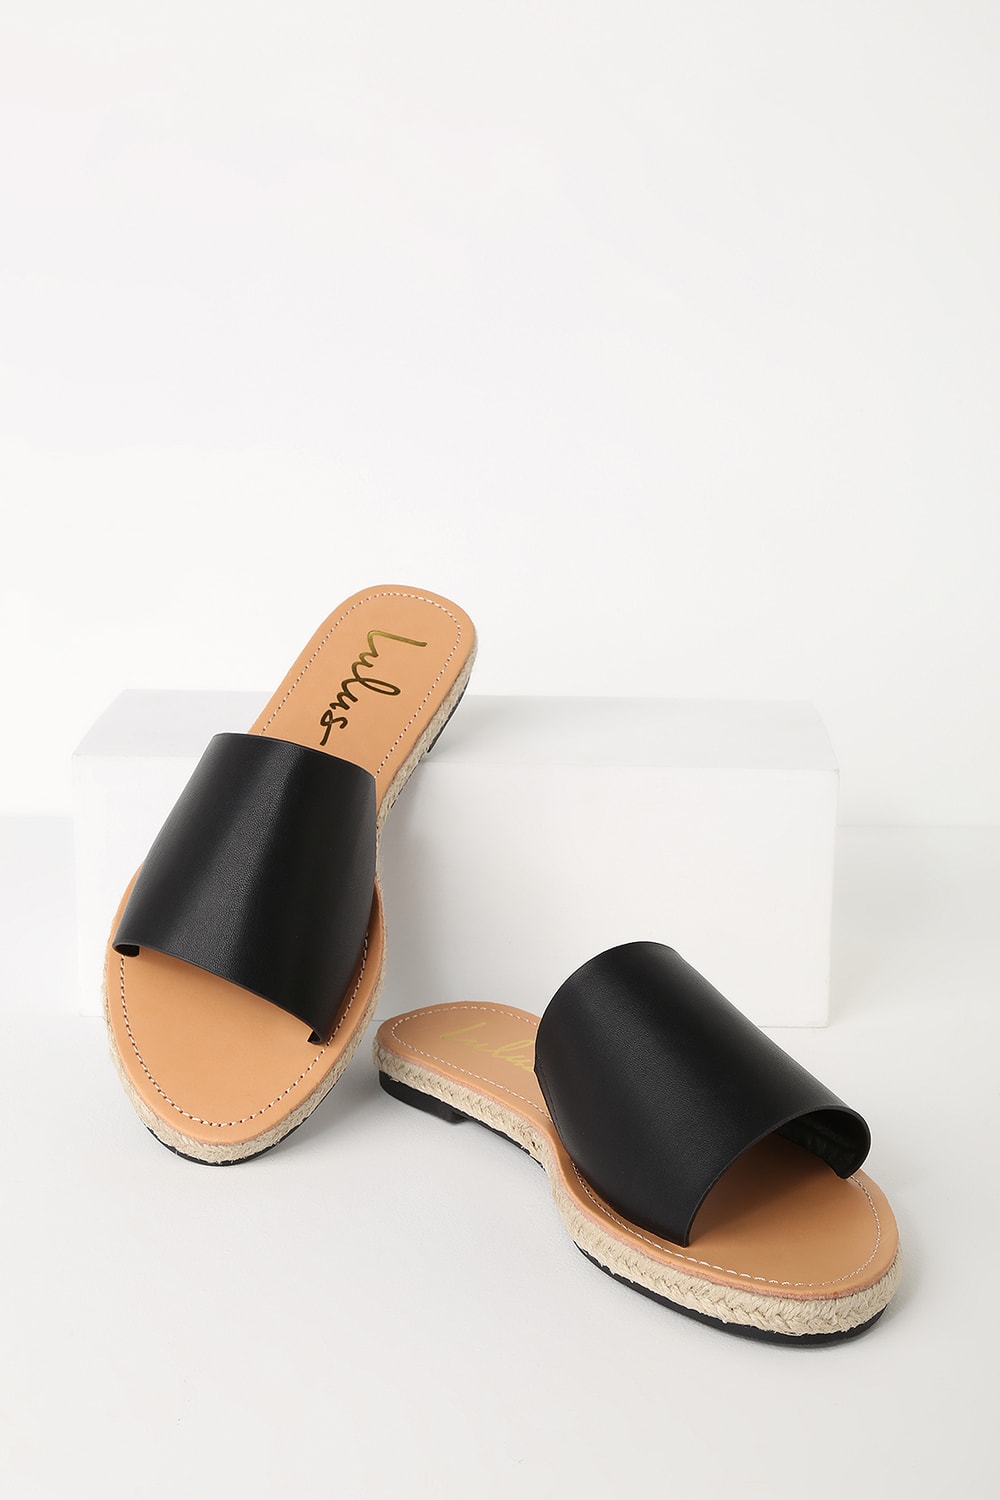 Marnie Black Espadrille Slide Sandals